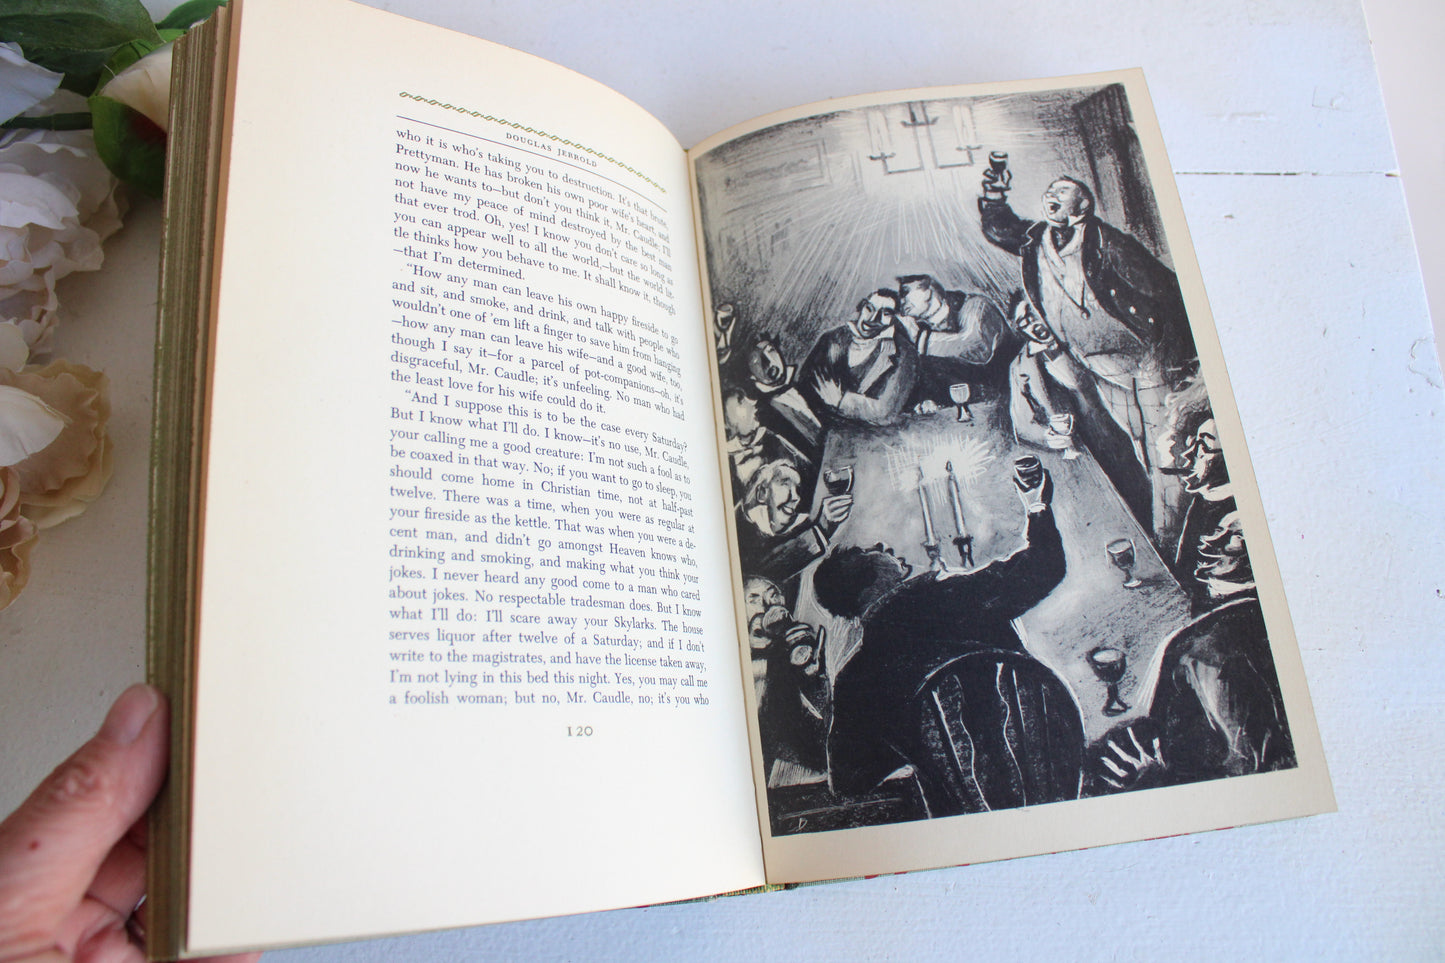 Vintage 1940s Book, "Whimsical Tales of Douglas Jerrold"